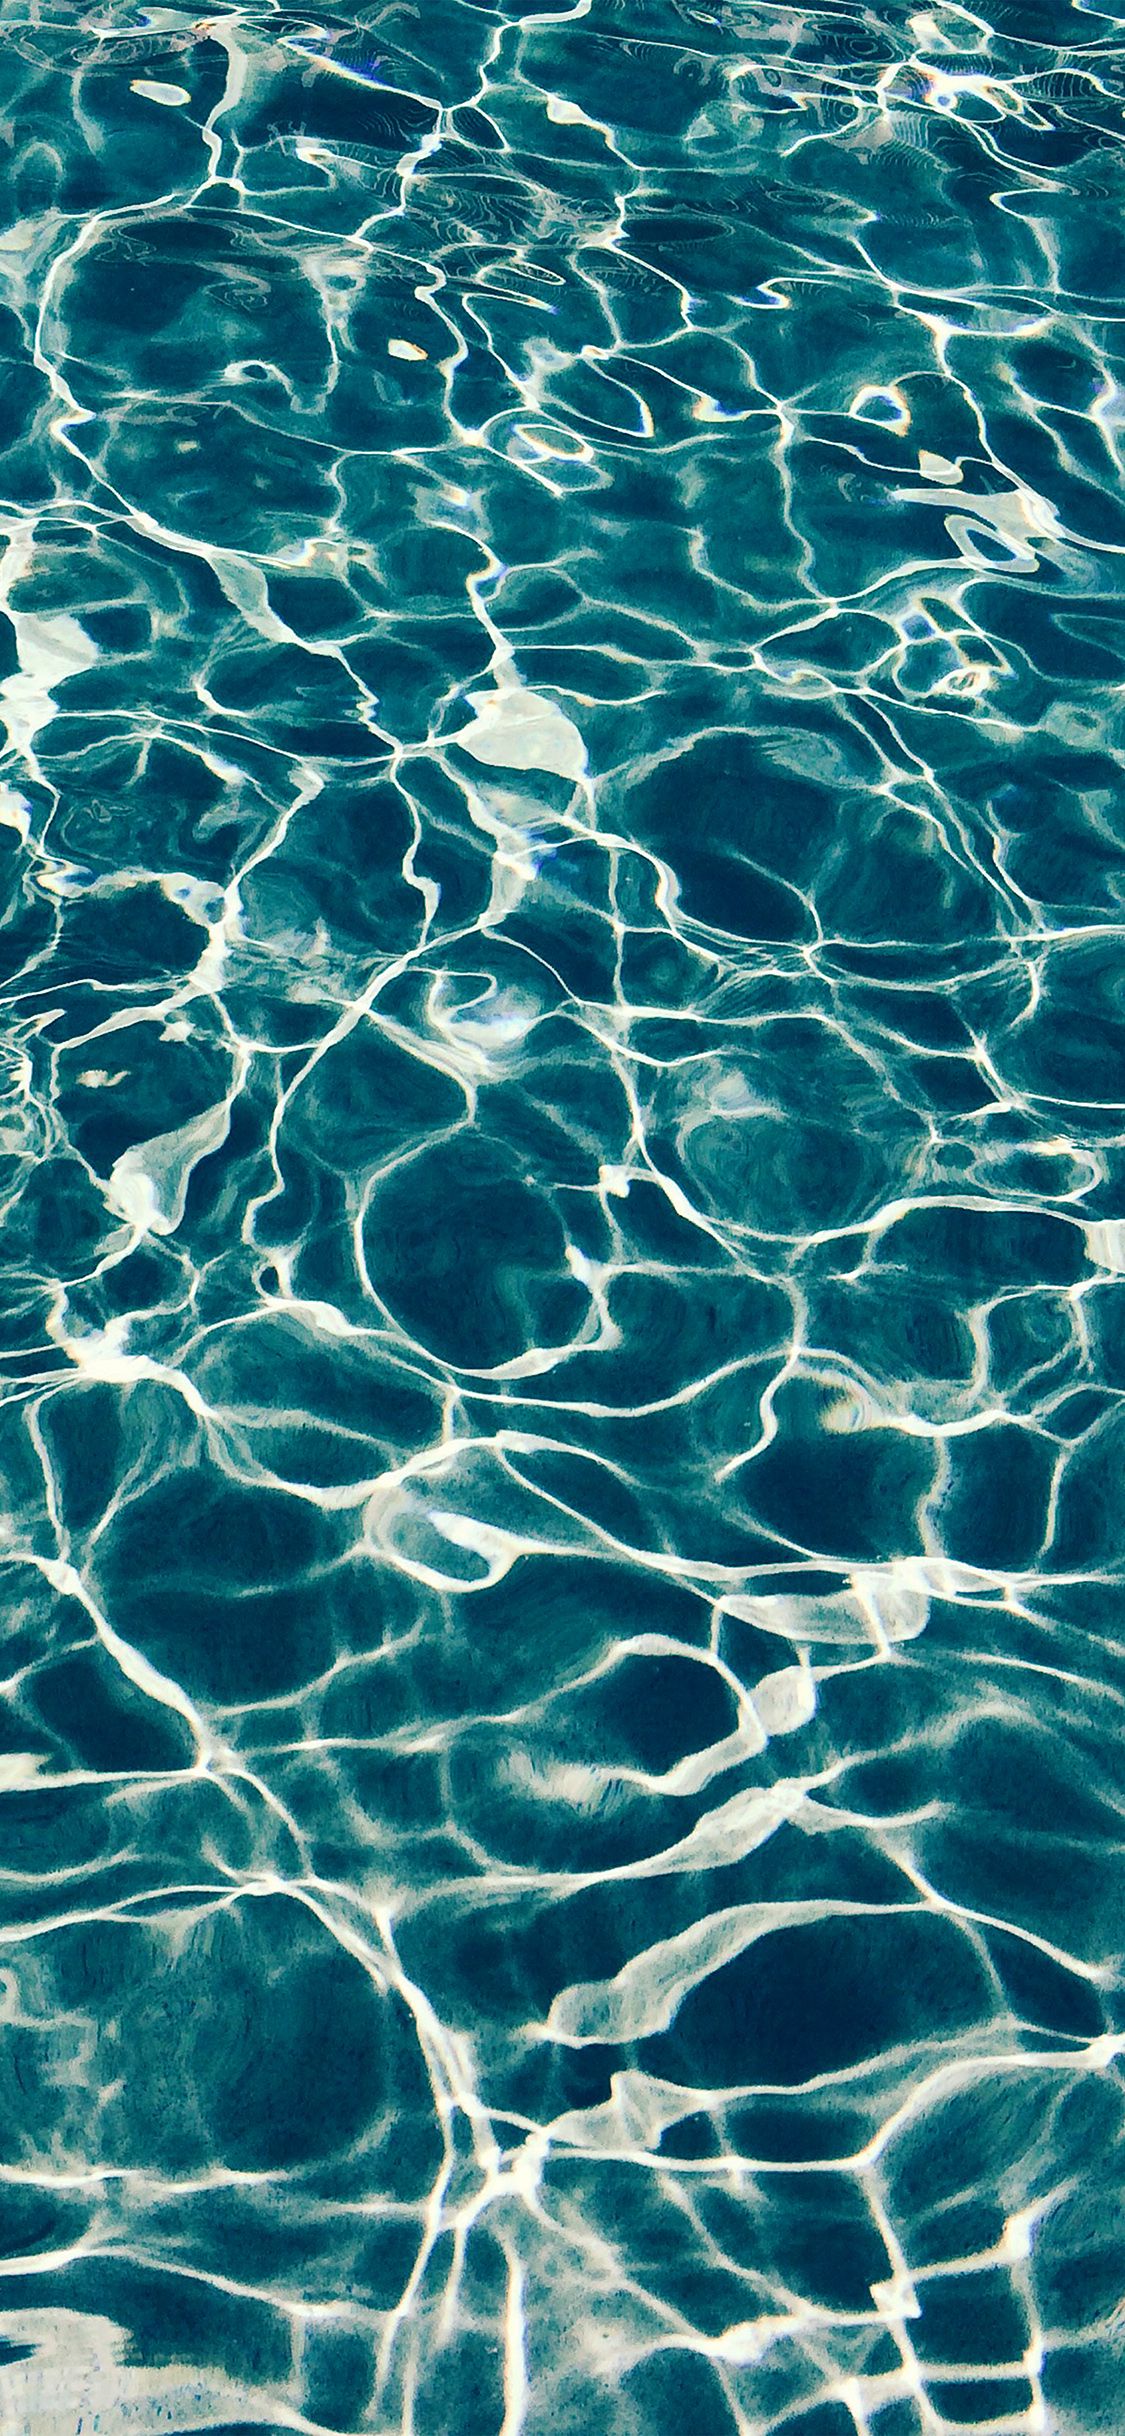 Wave art water sea summer cool pattern iPhone X Wallpaper Free Download